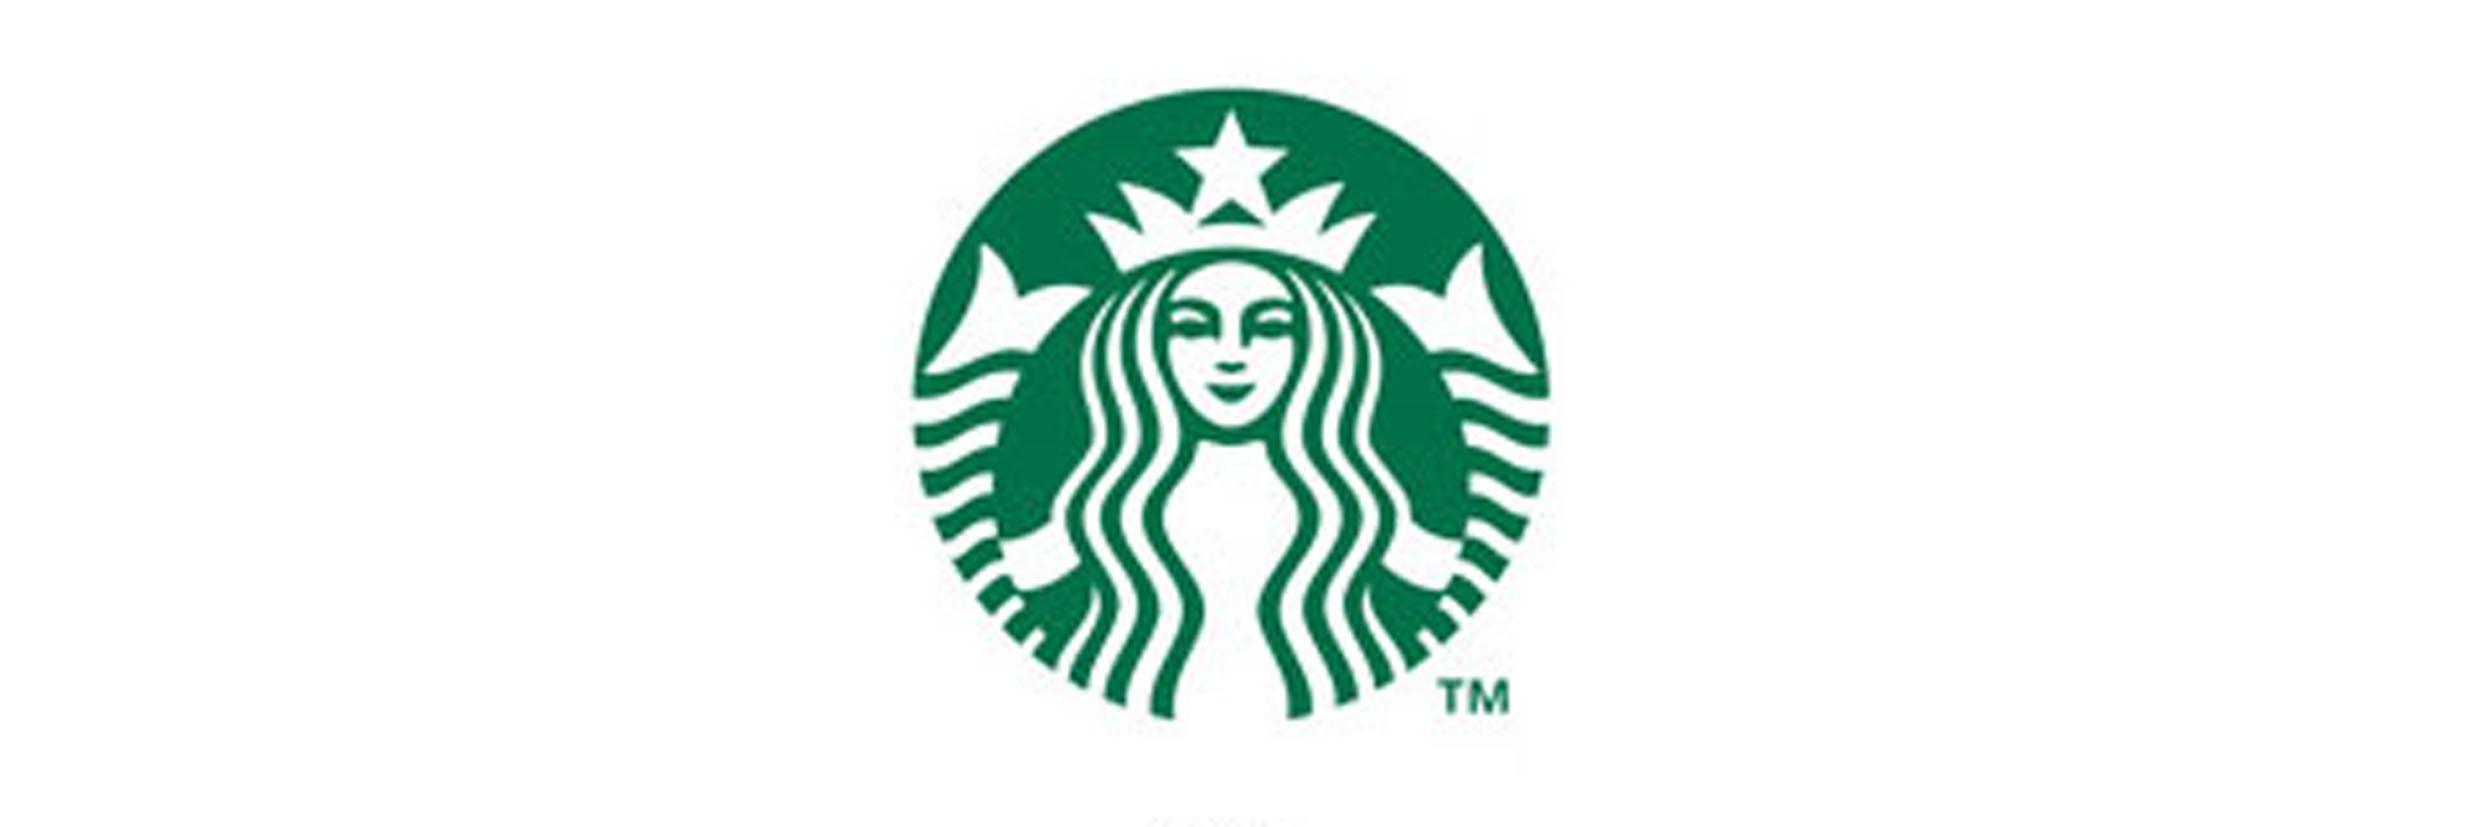 Mini Starbucks Logo - Mini starbucks Logos